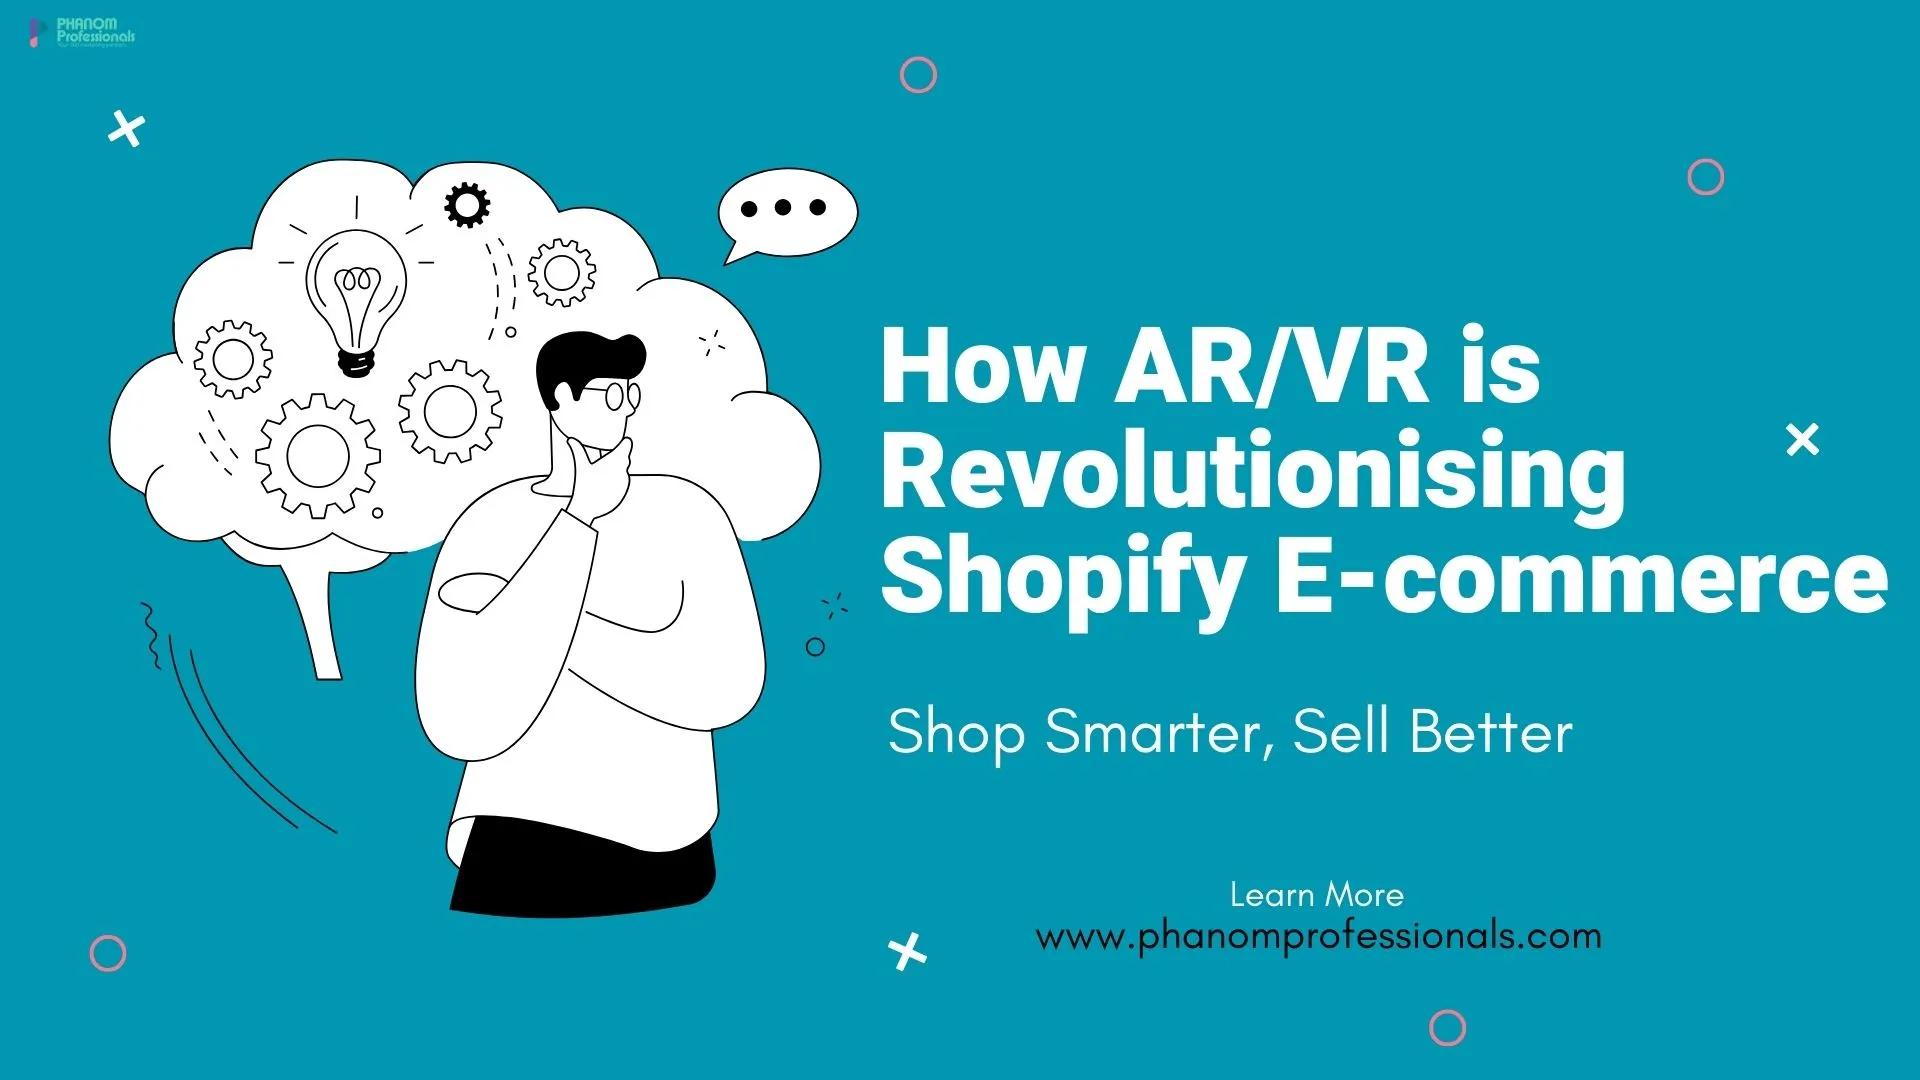 How AR/VR is Revolutionising Shopify E-commerce